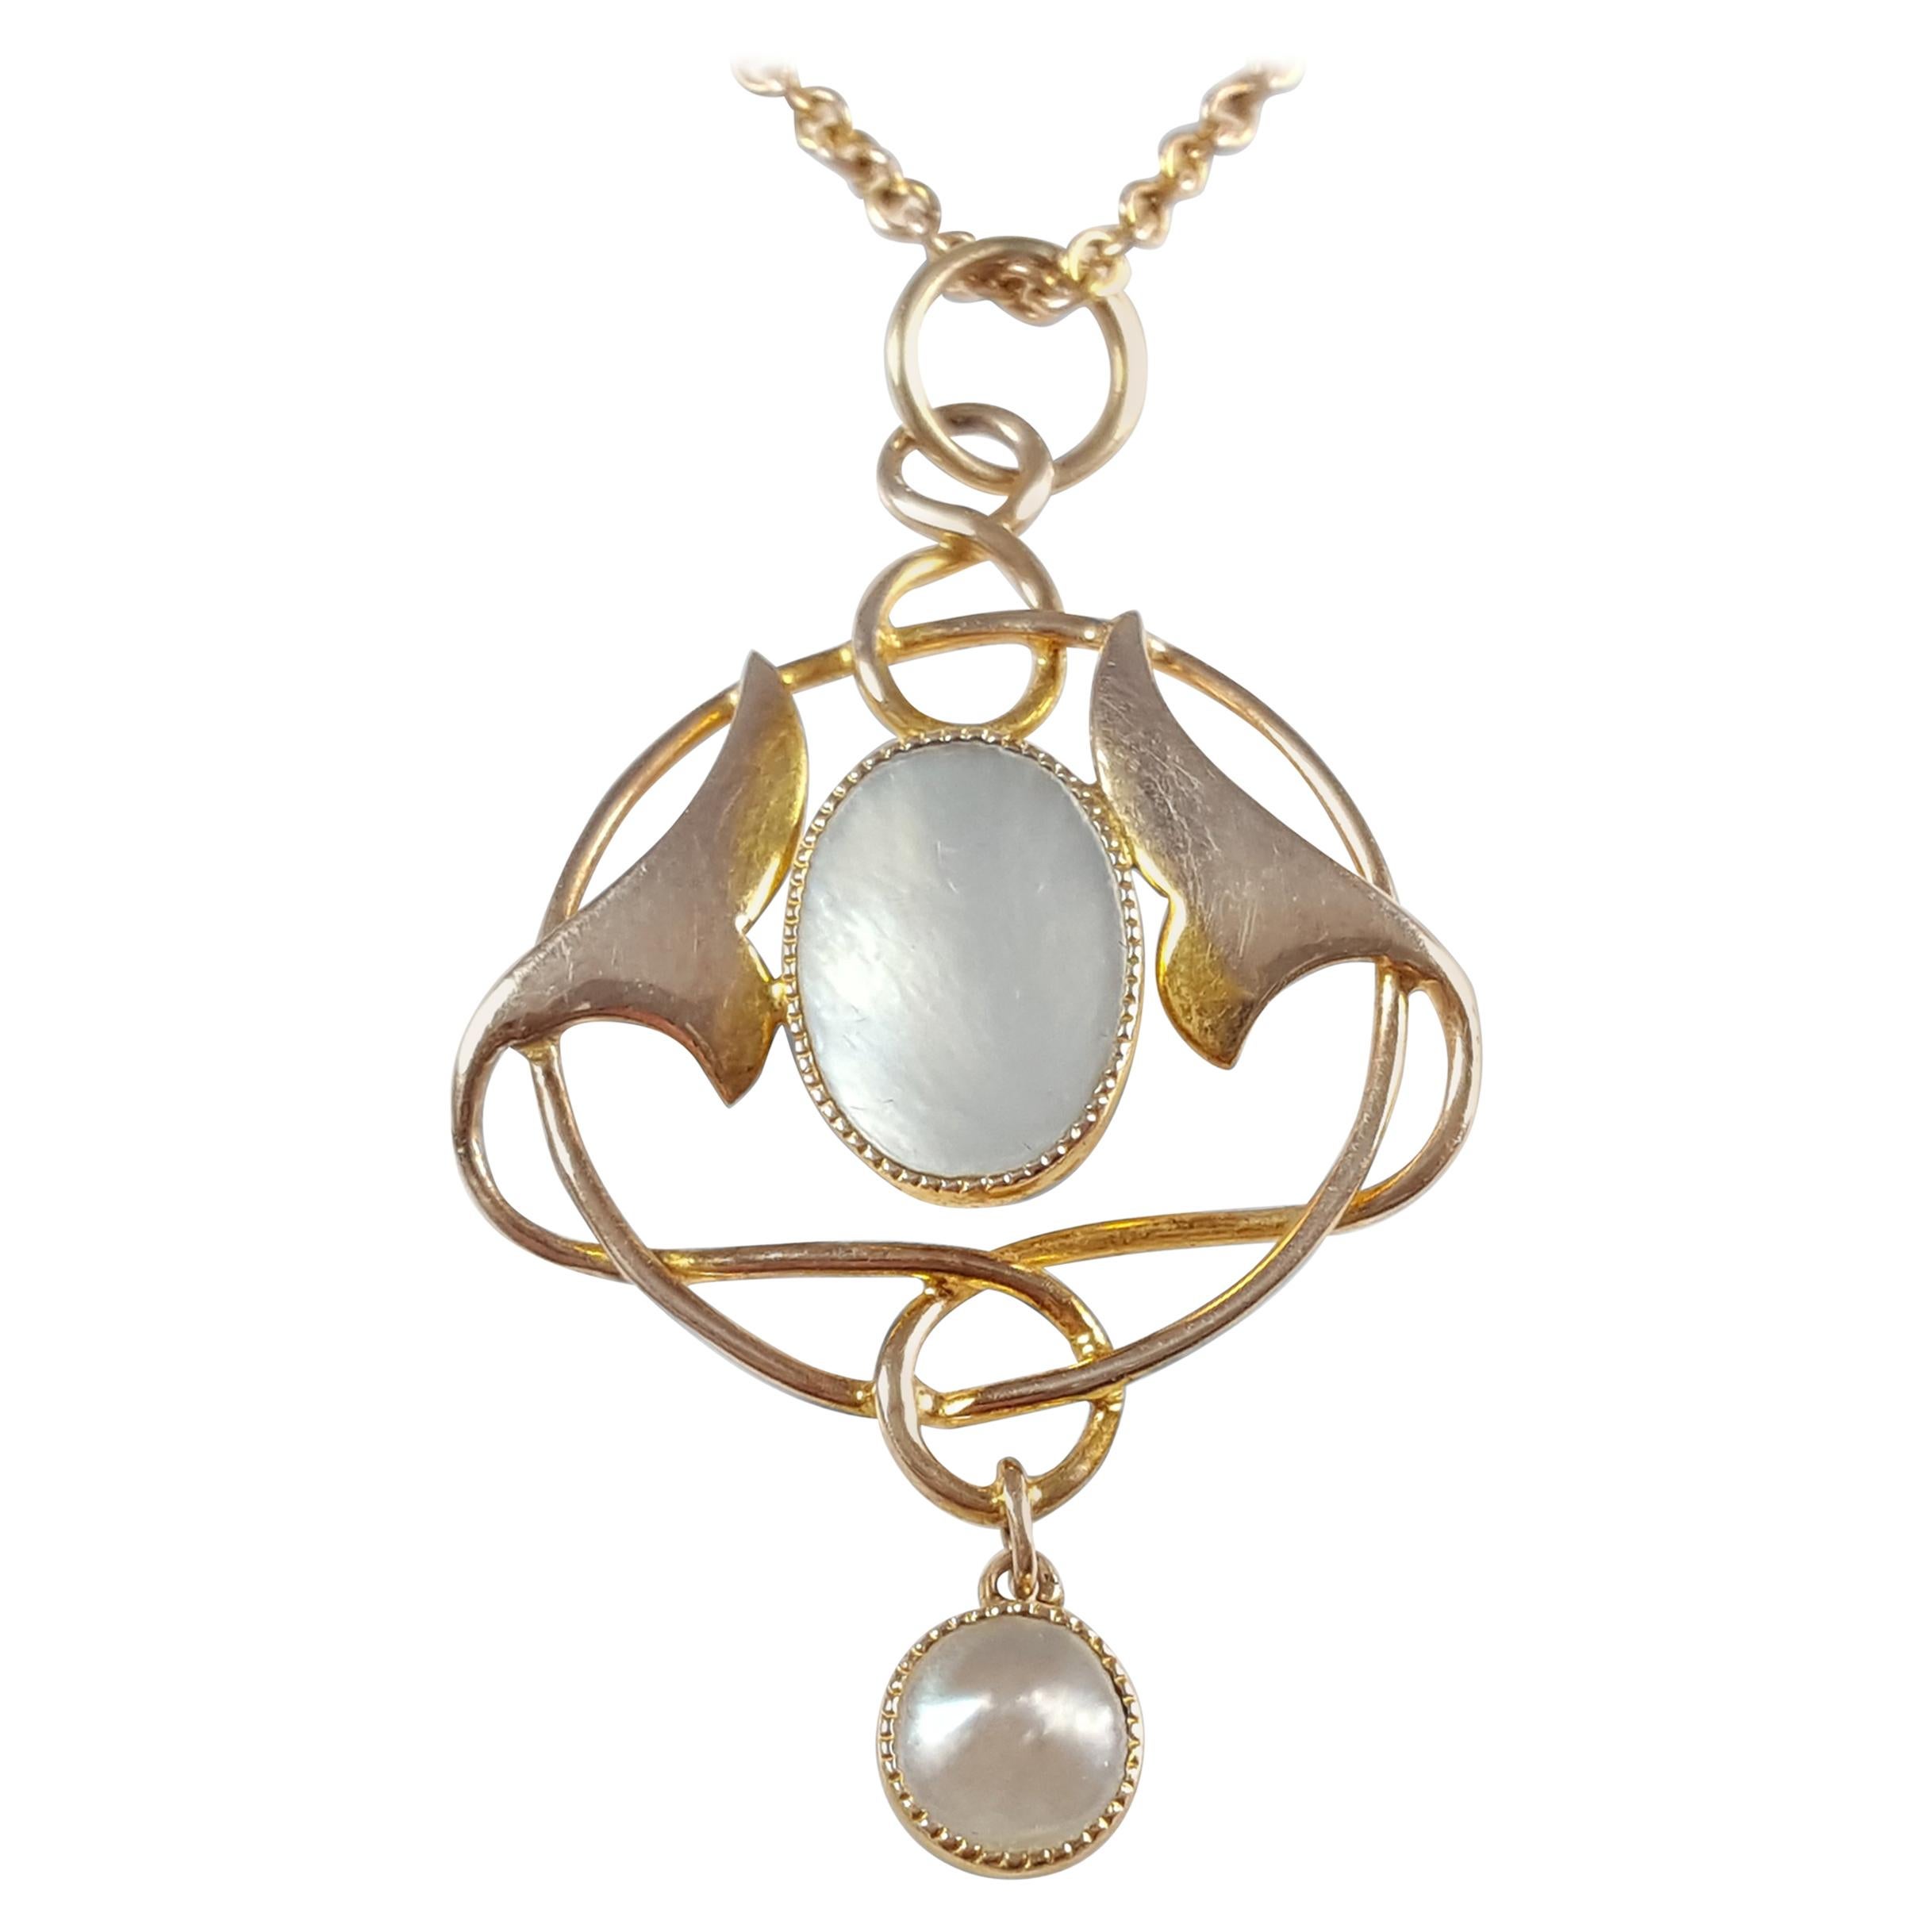 Art Nouveau Murrle Bennett & Co 9 Karat Gold and Pearl Pendant with Chain